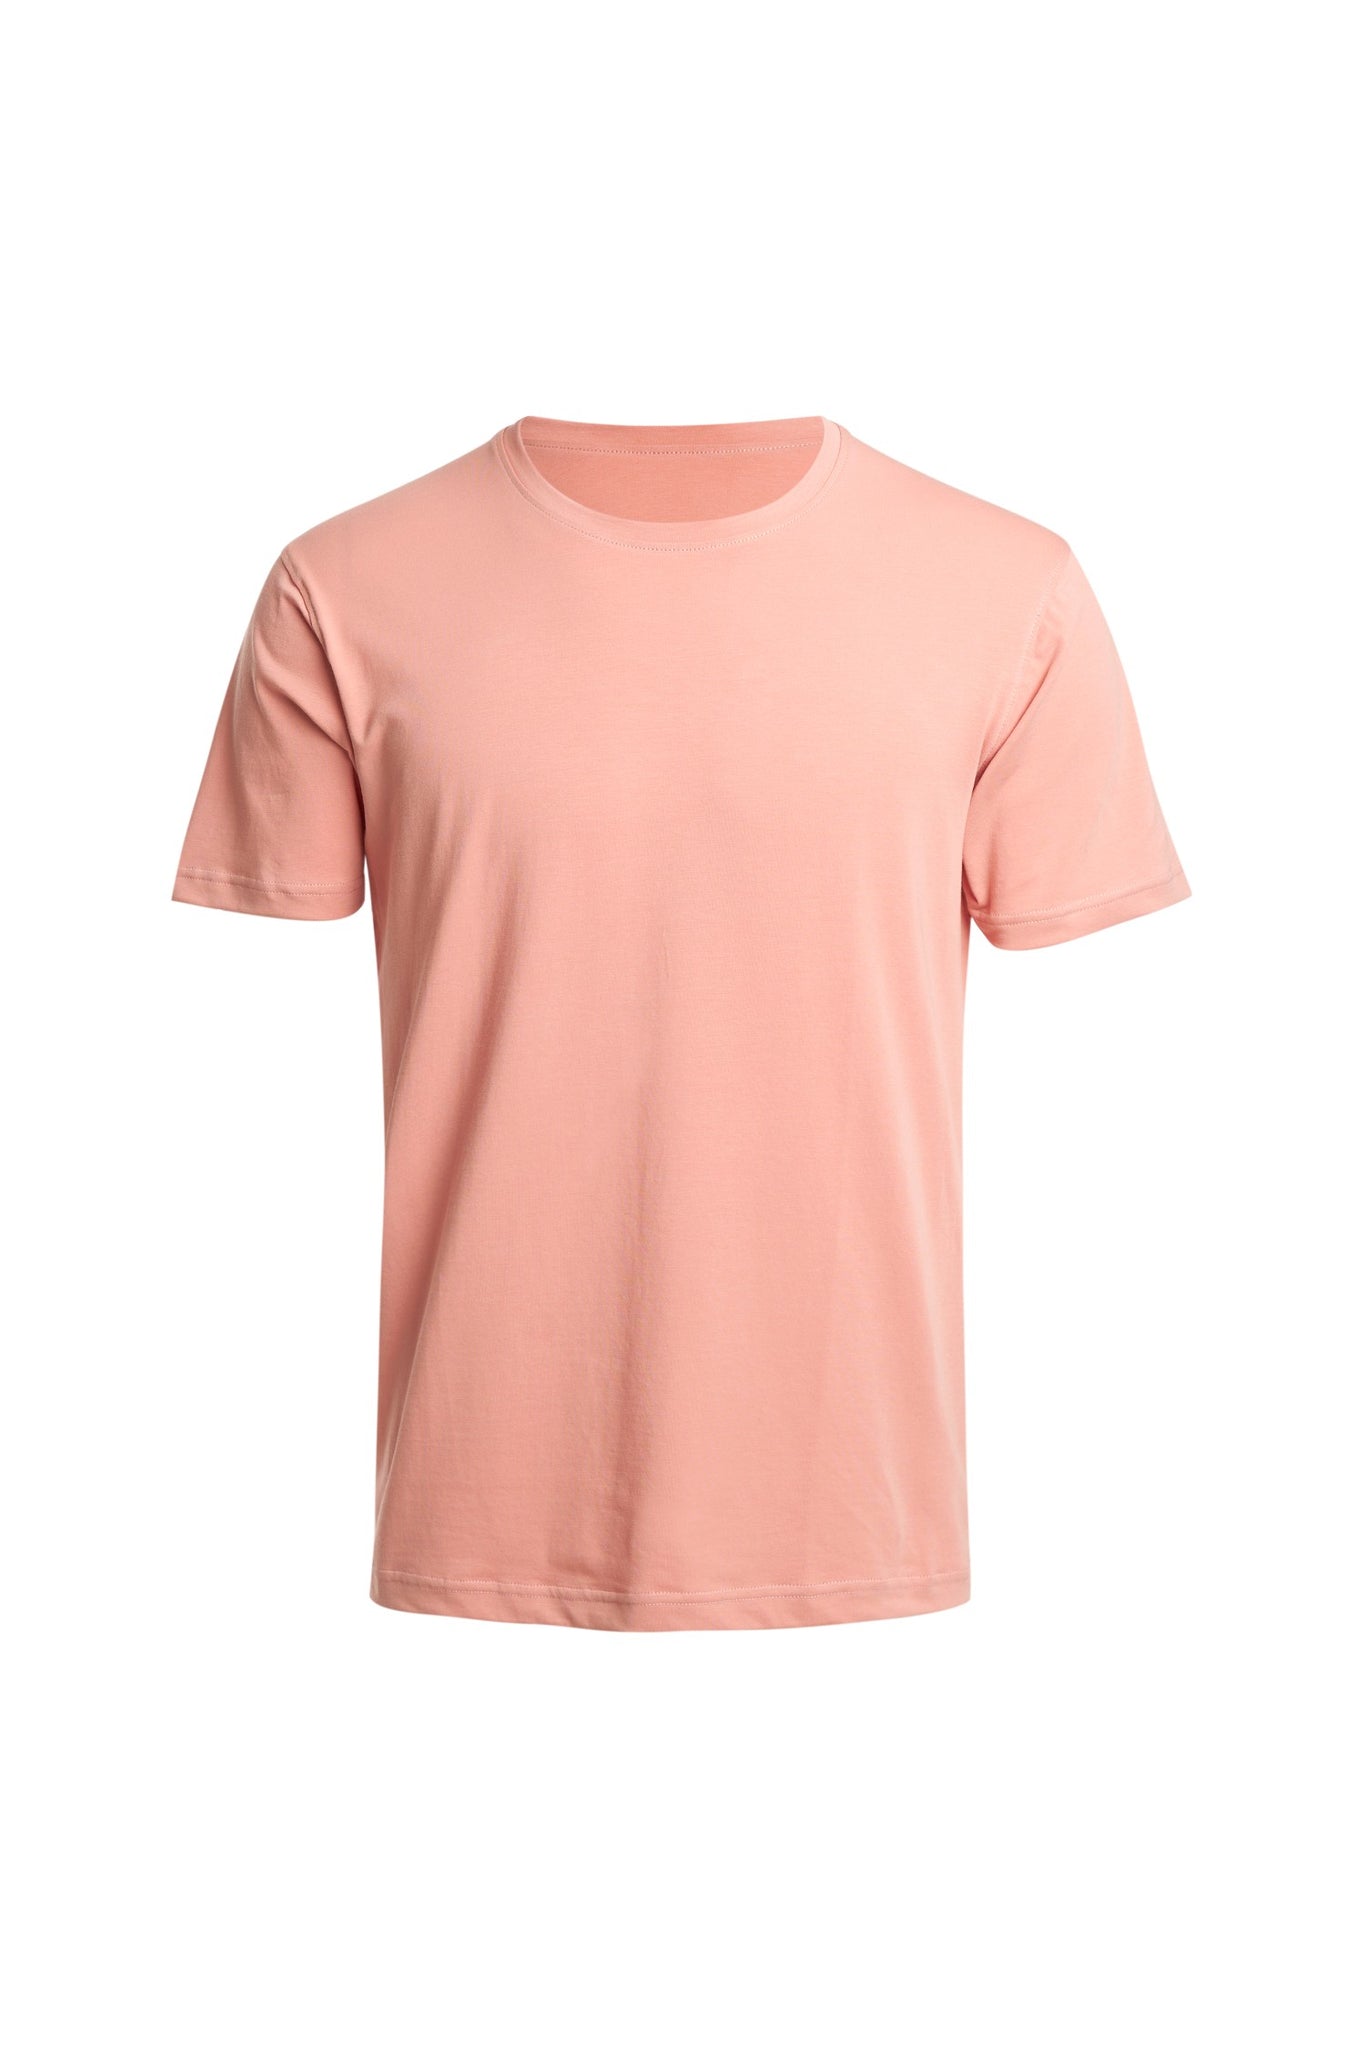 Salmon pink short sleeve T-shirt